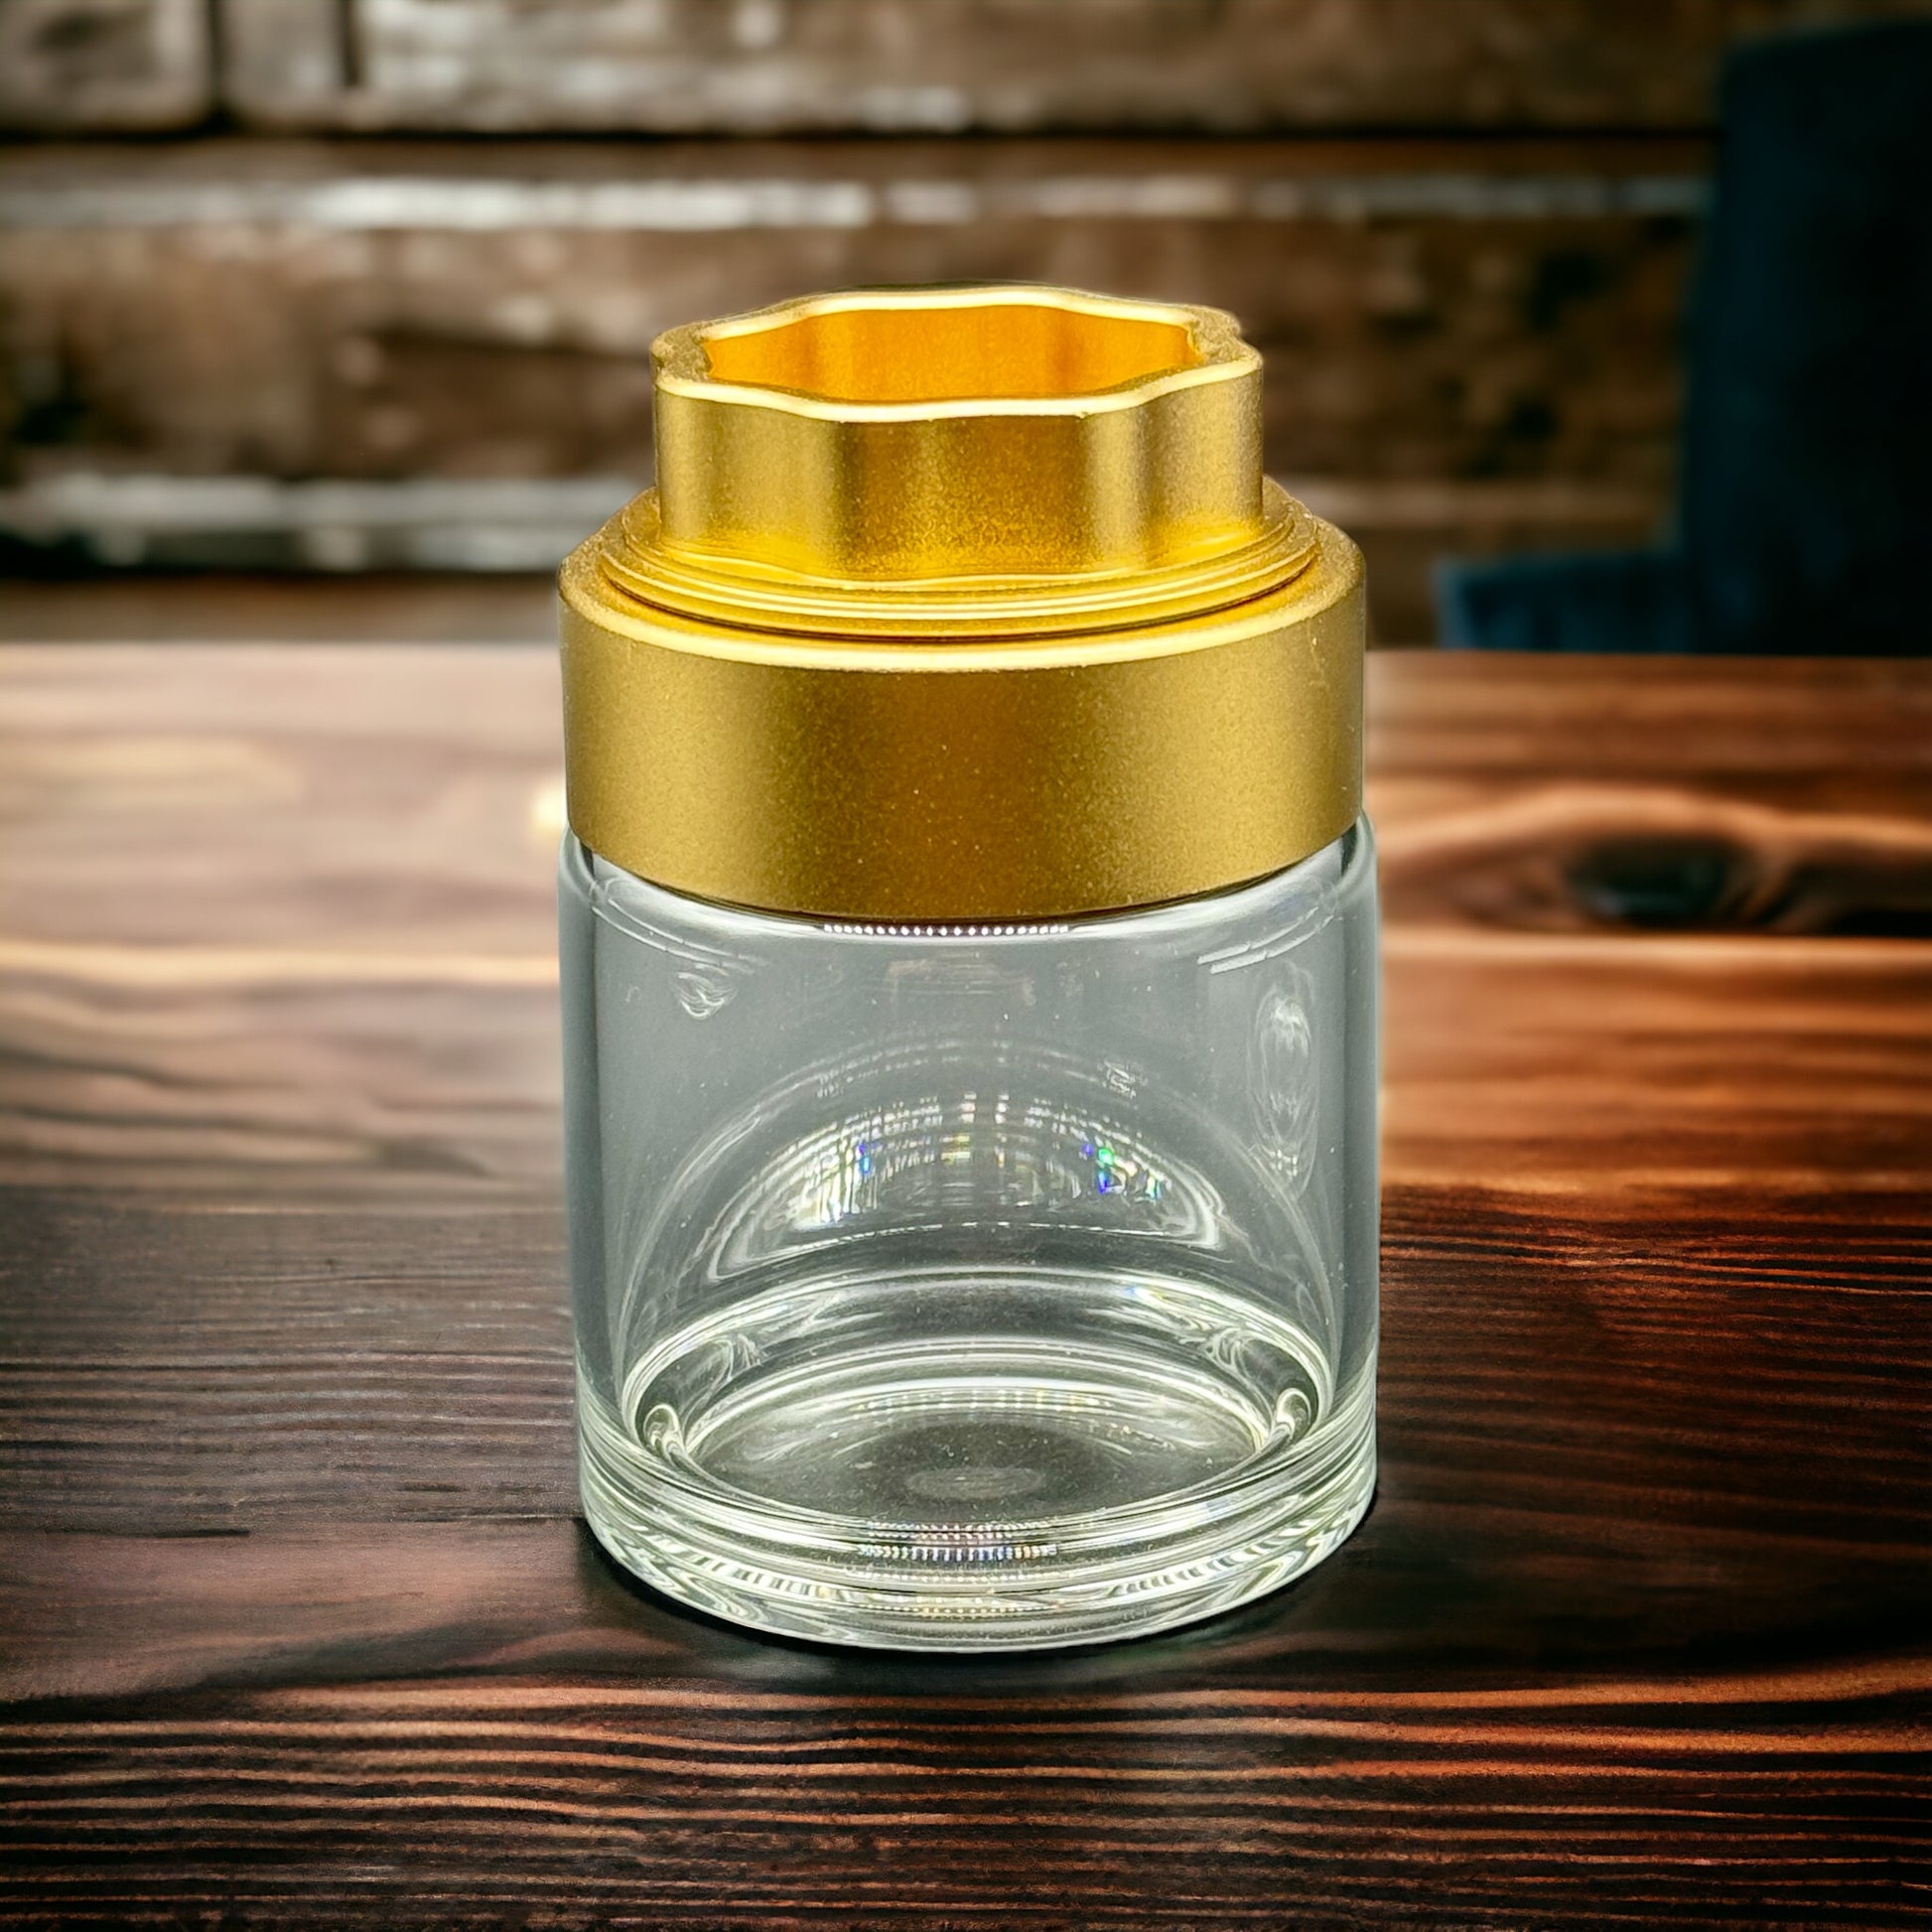 Exclusive 2 in 1 Glass Jar & Herb Grinder gold color 